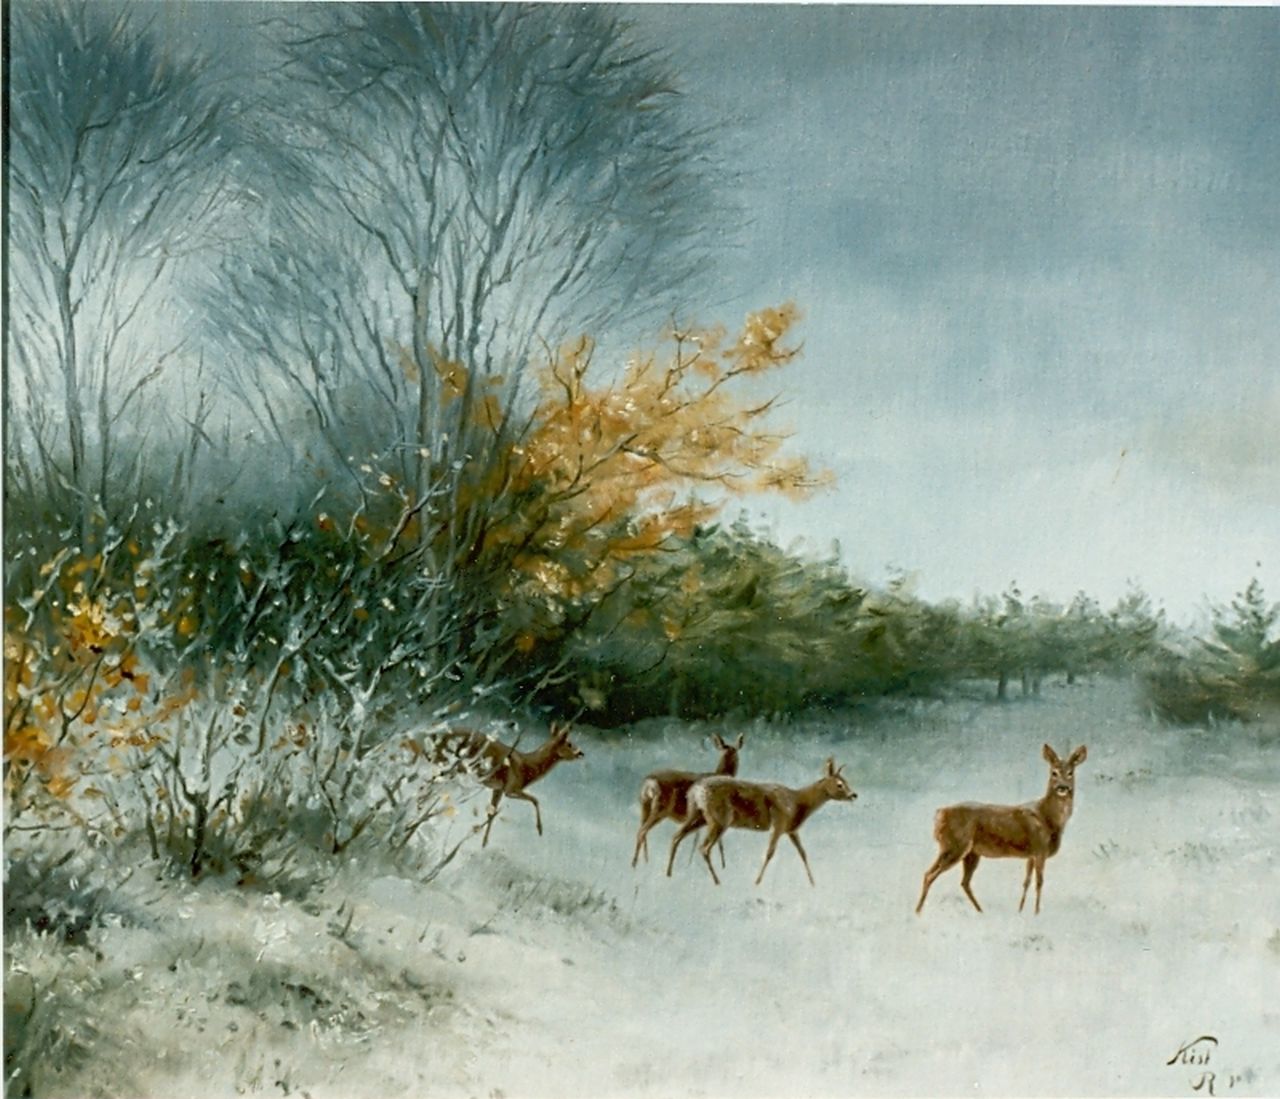 Kiss R.  | Richard Kiss, A winter landscape with deer, Öl auf Leinwand auf Holz 50,0 x 80,0 cm, signed l.l. und dated '90